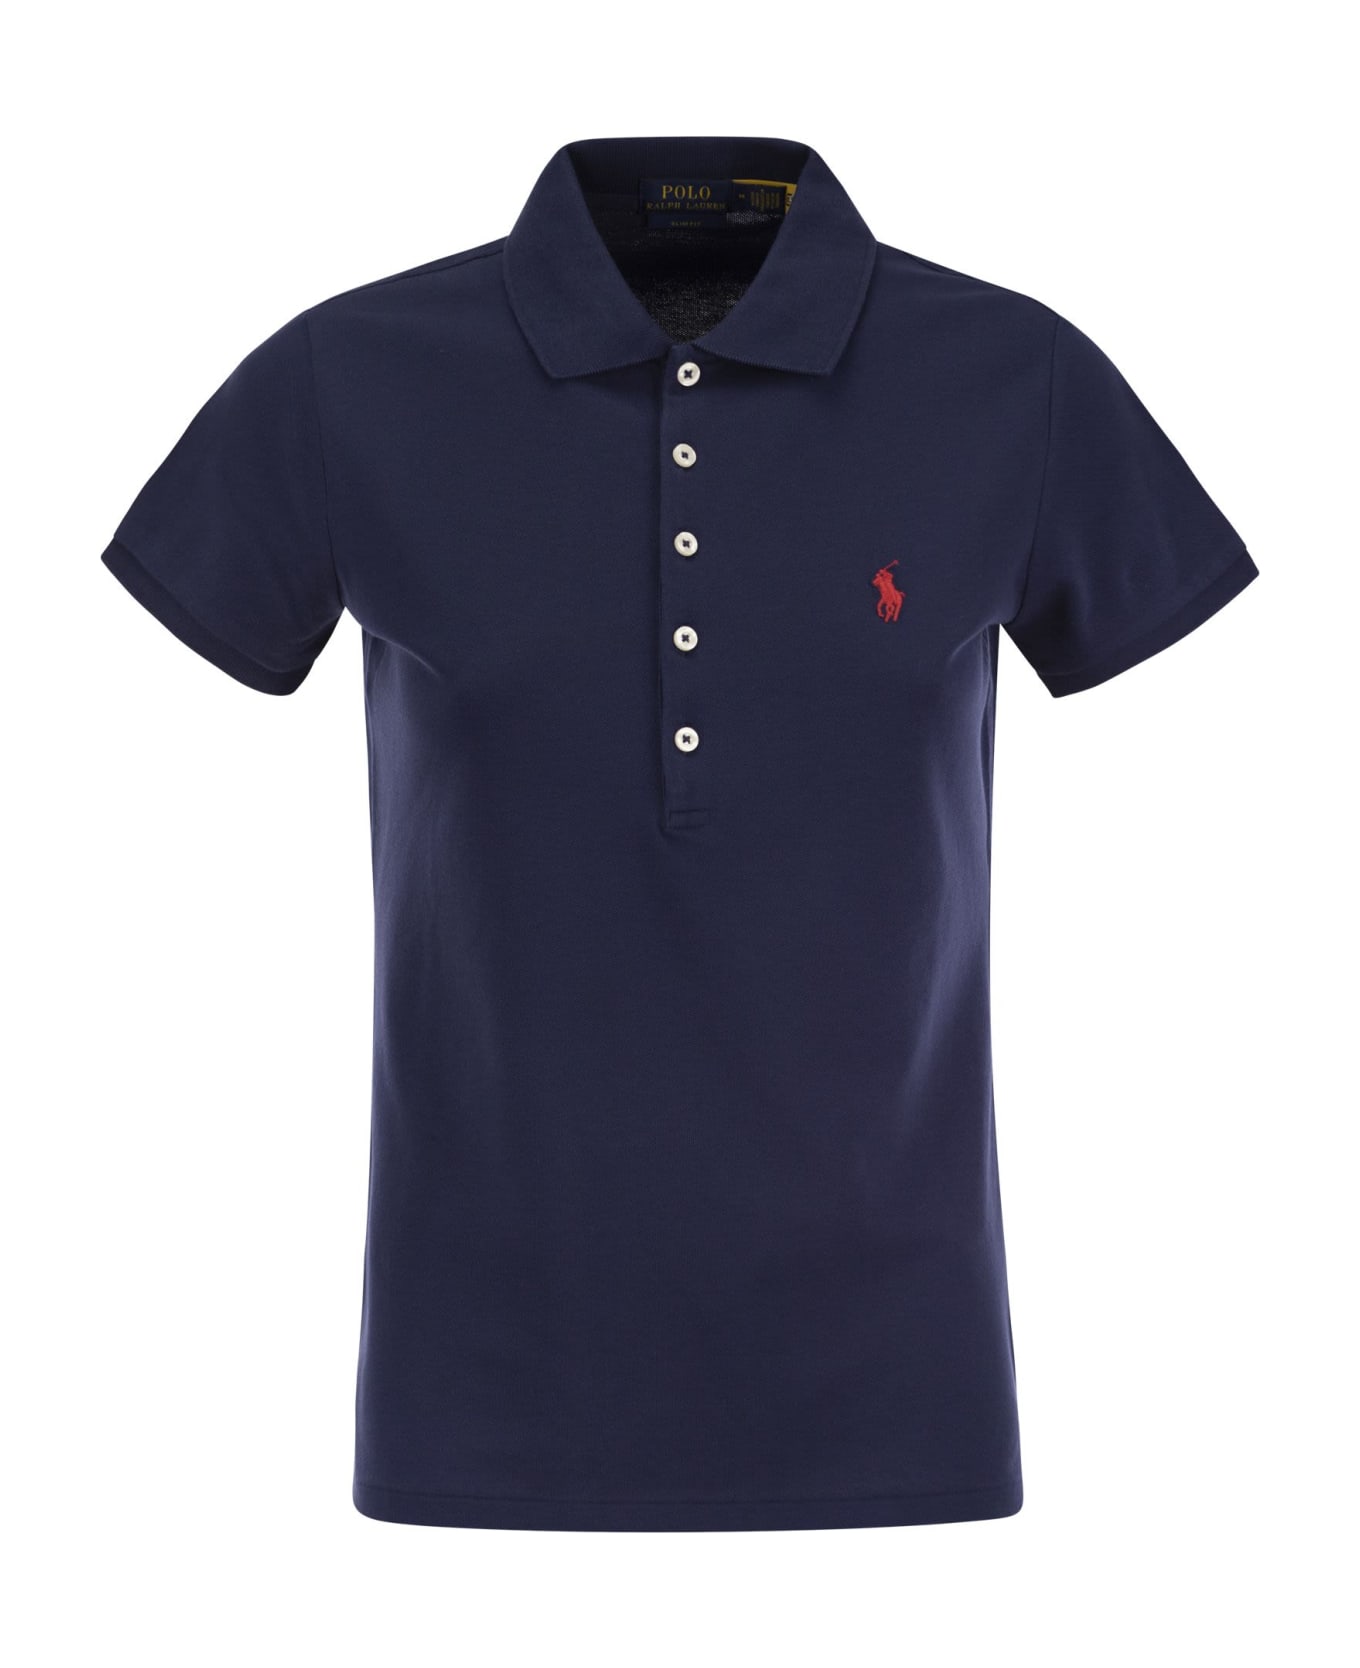 Polo Ralph Lauren Polo Shirt - Blue ポロシャツ